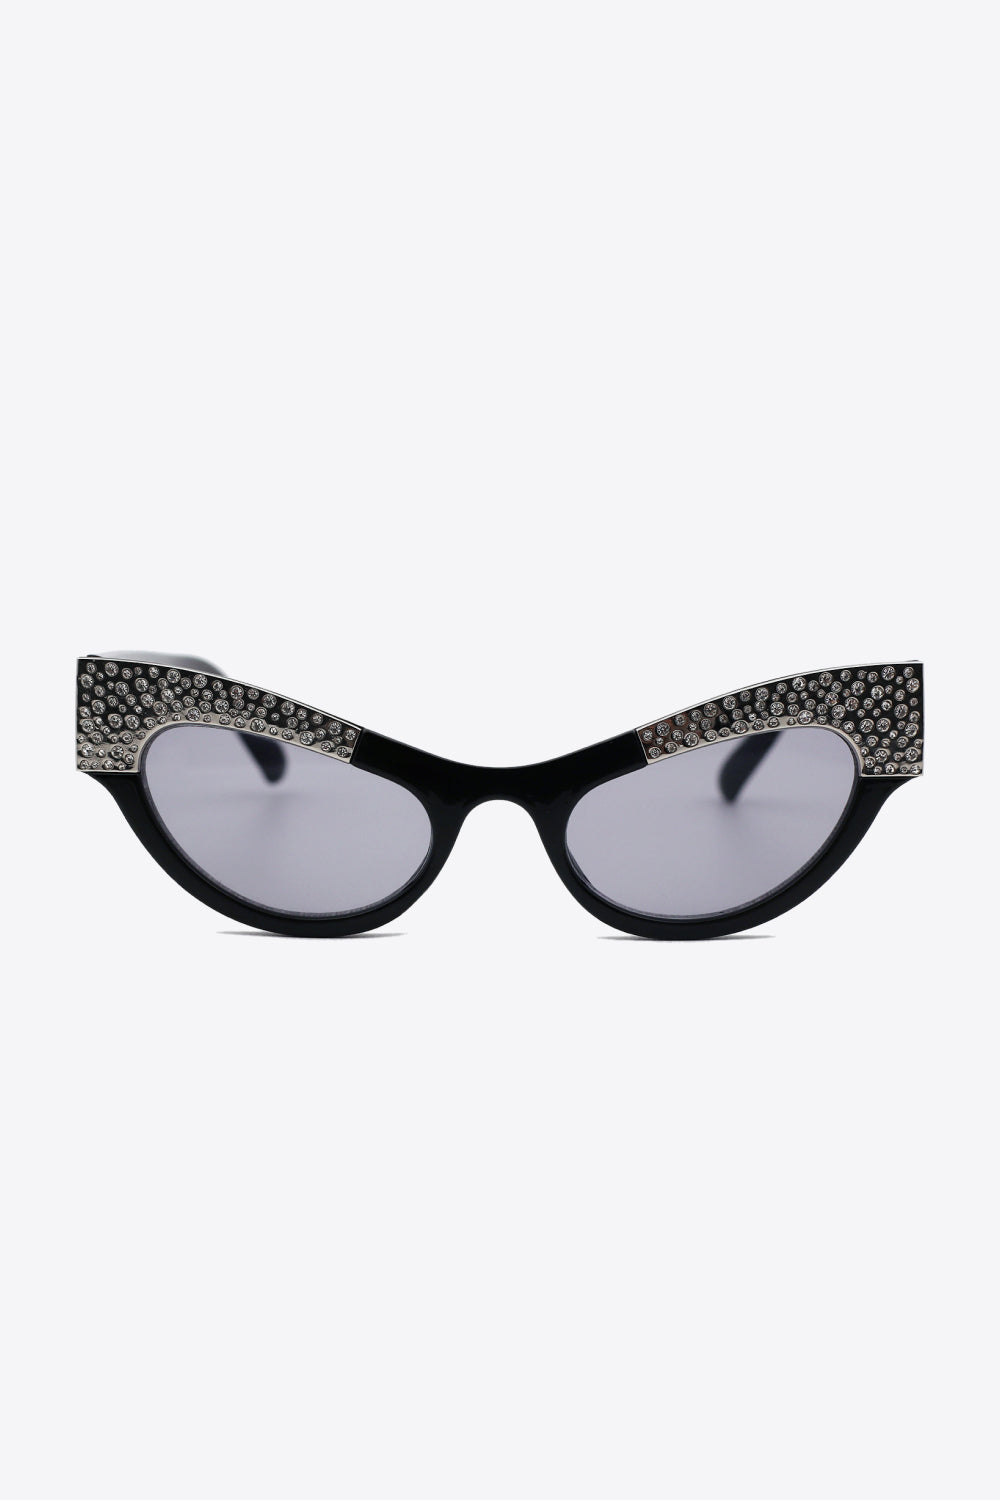 Uylee's Boutique UV400 Rhinestone Trim Cat-Eye Sunglasses